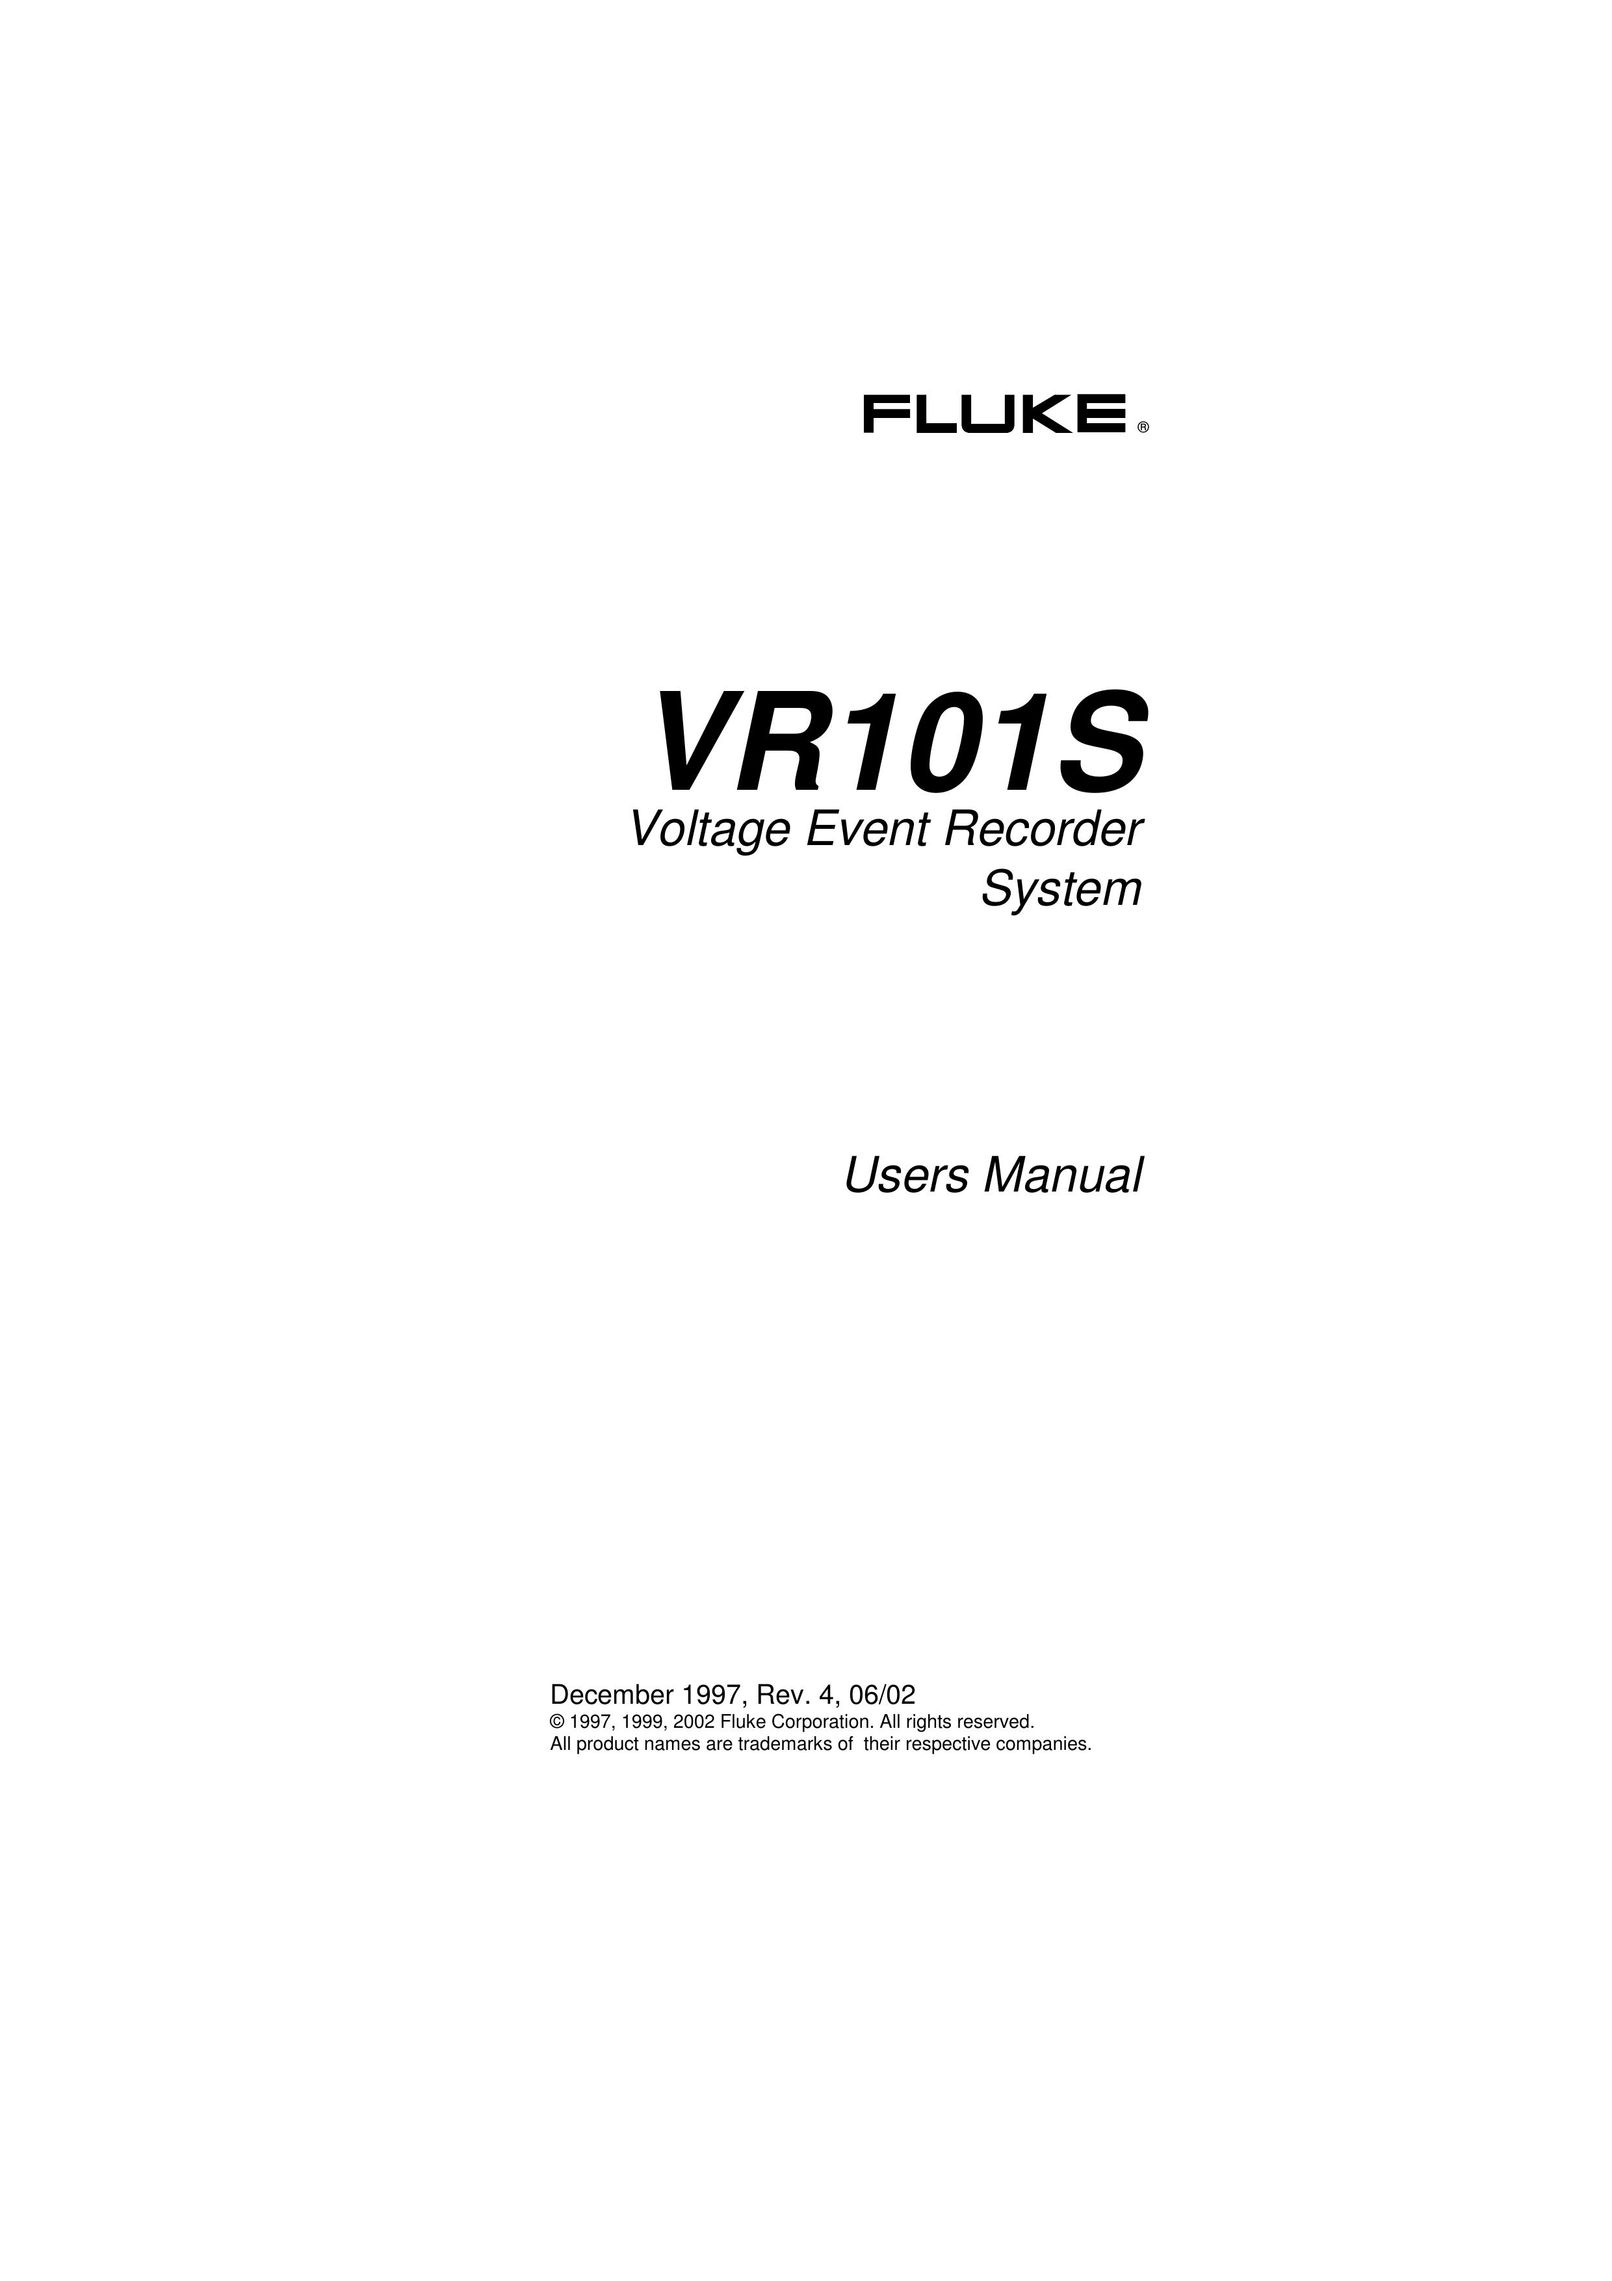 Fluke VR101S Cable Box User Manual